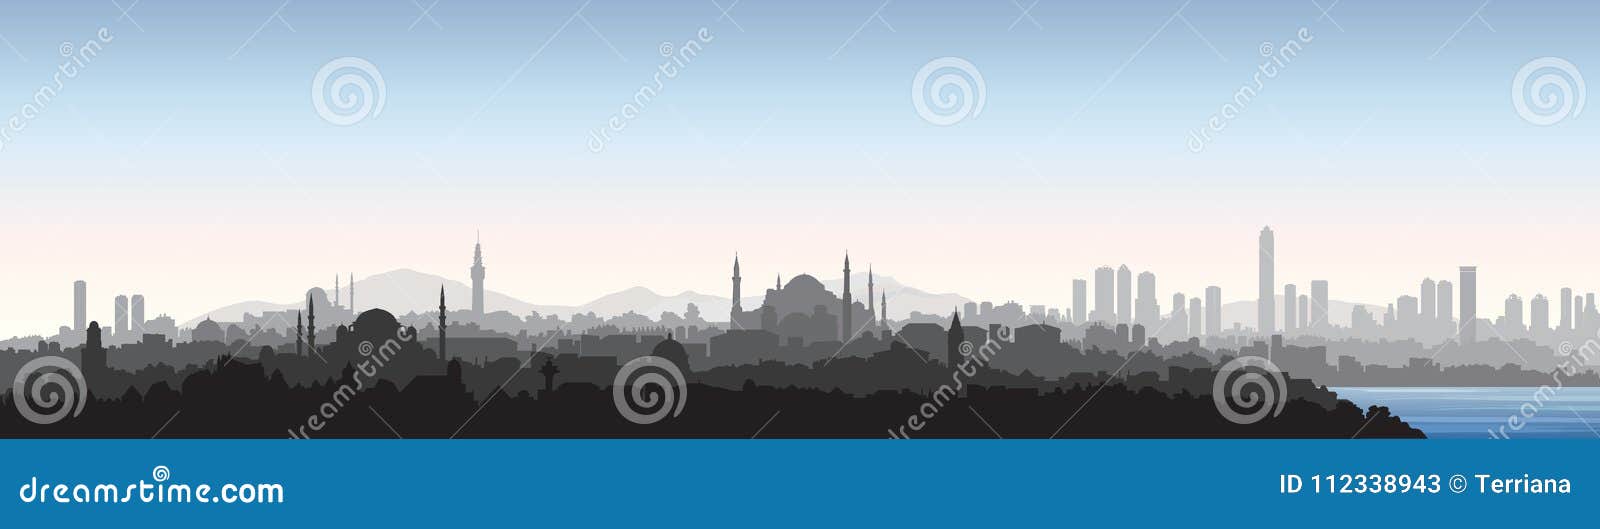 istanbul city skyline. travel turkey background. turkish urban cityscape